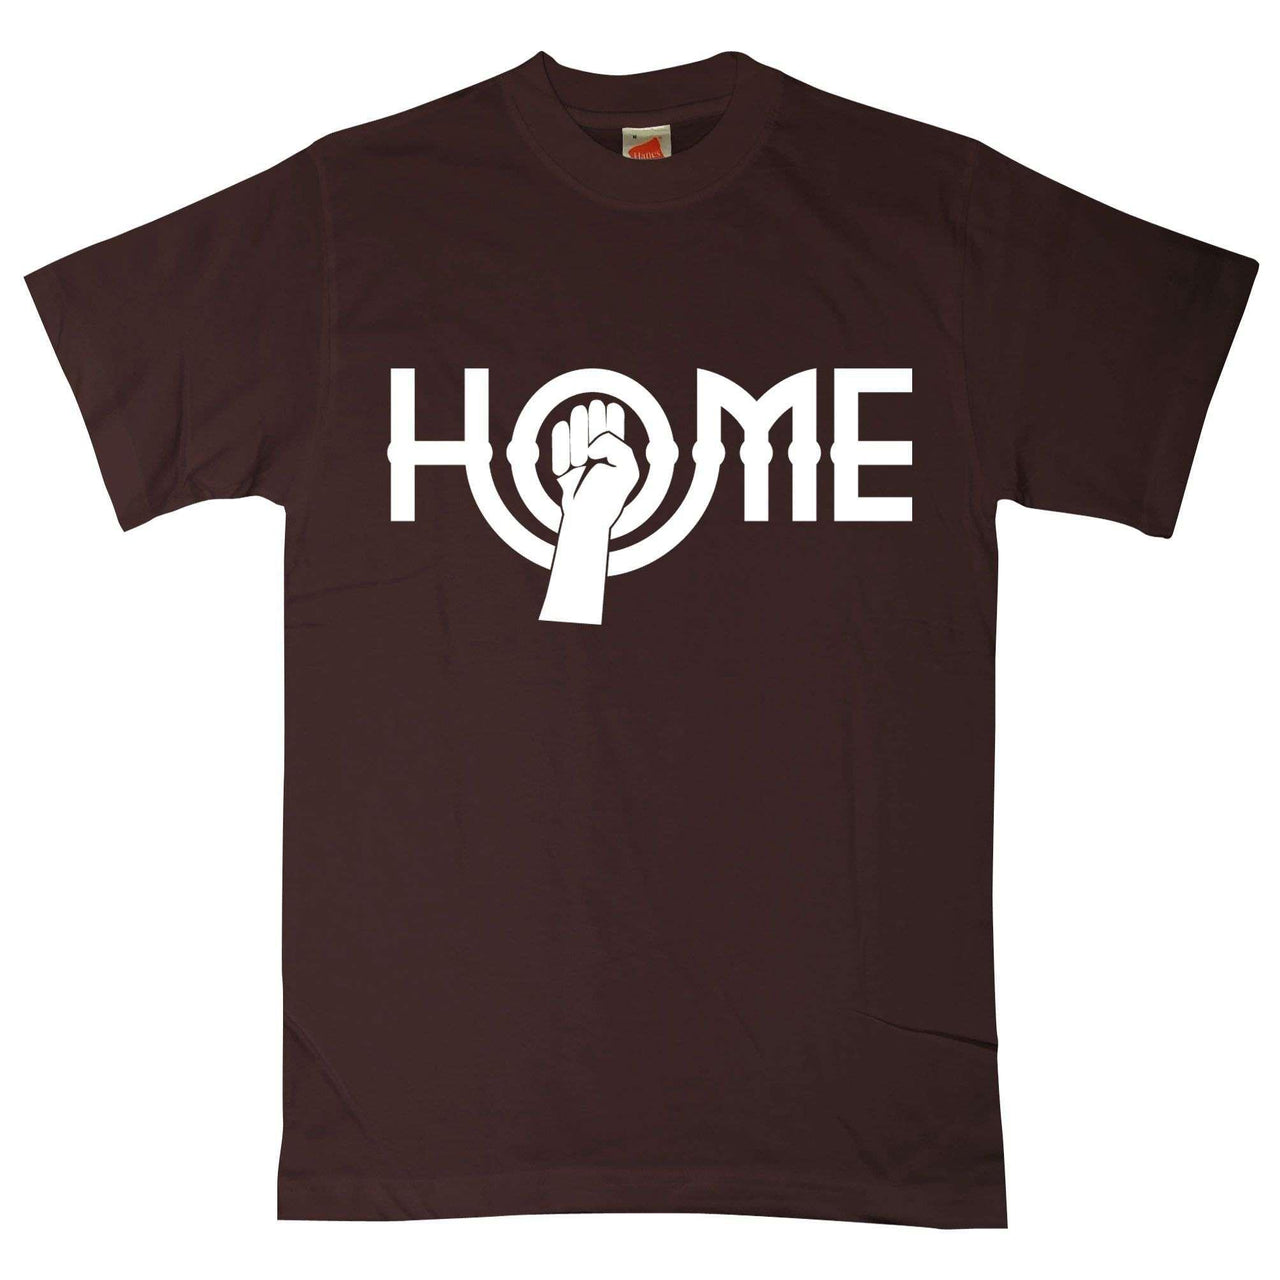 Home Mens Graphic T-Shirt As Worn By John Lennon 8Ball